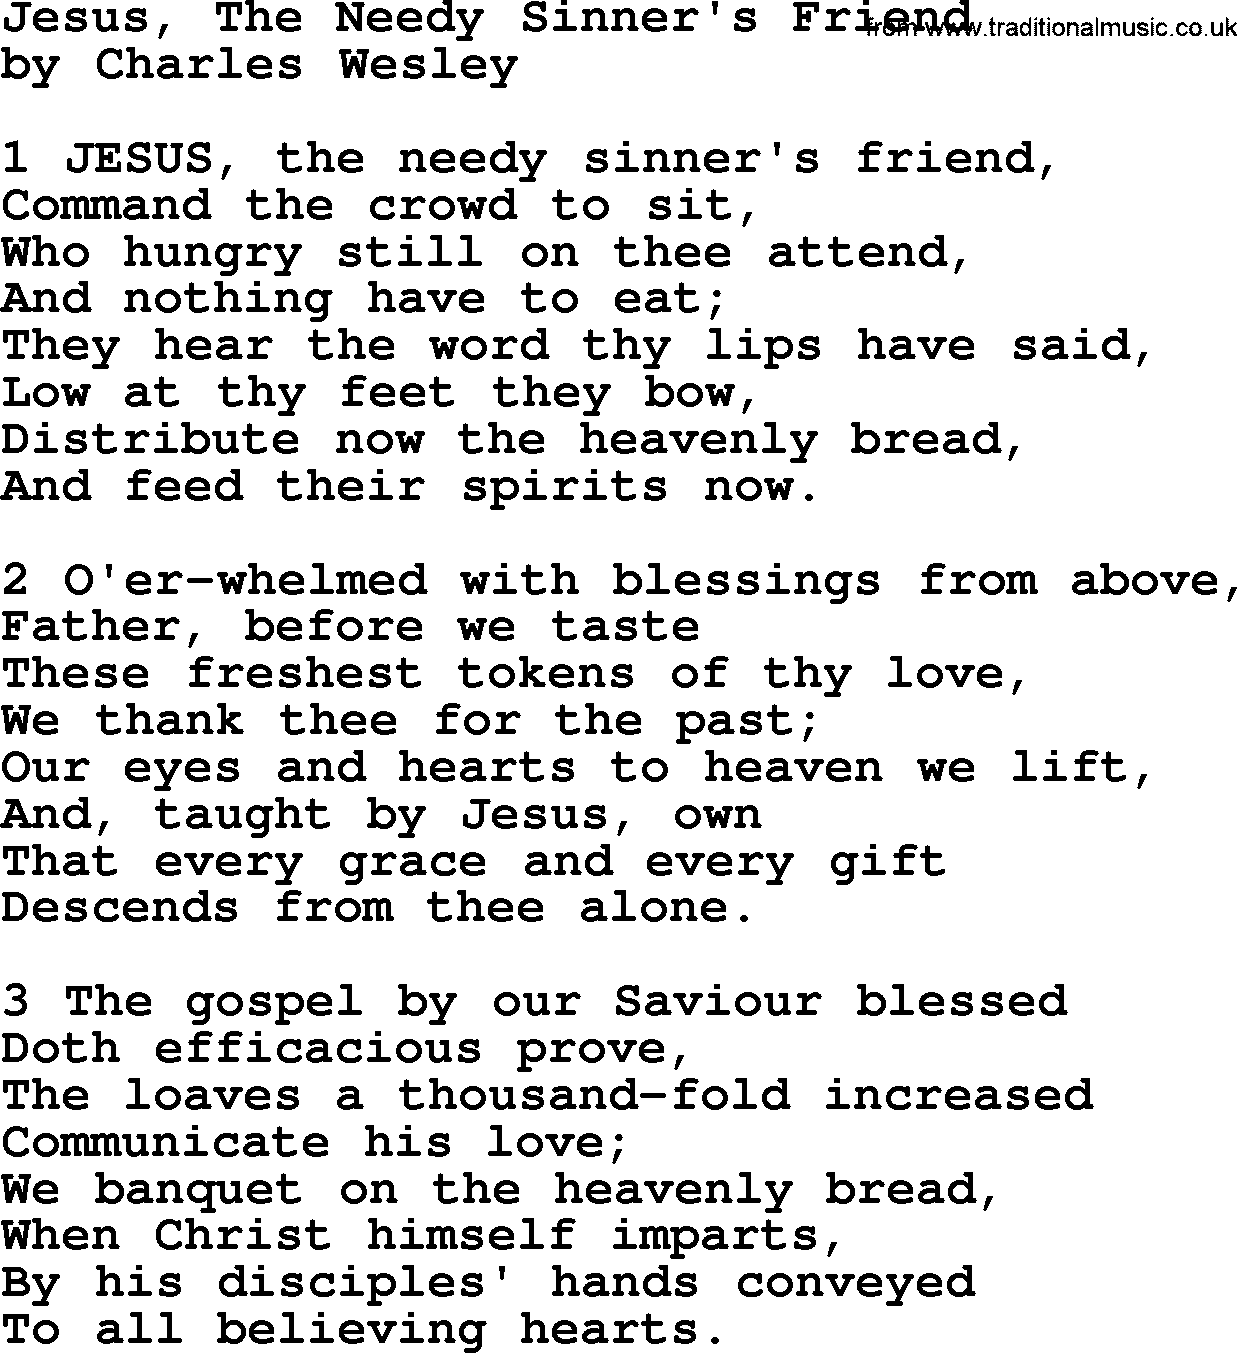 Charles Wesley hymn: Jesus, The Needy Sinner's Friend, lyrics